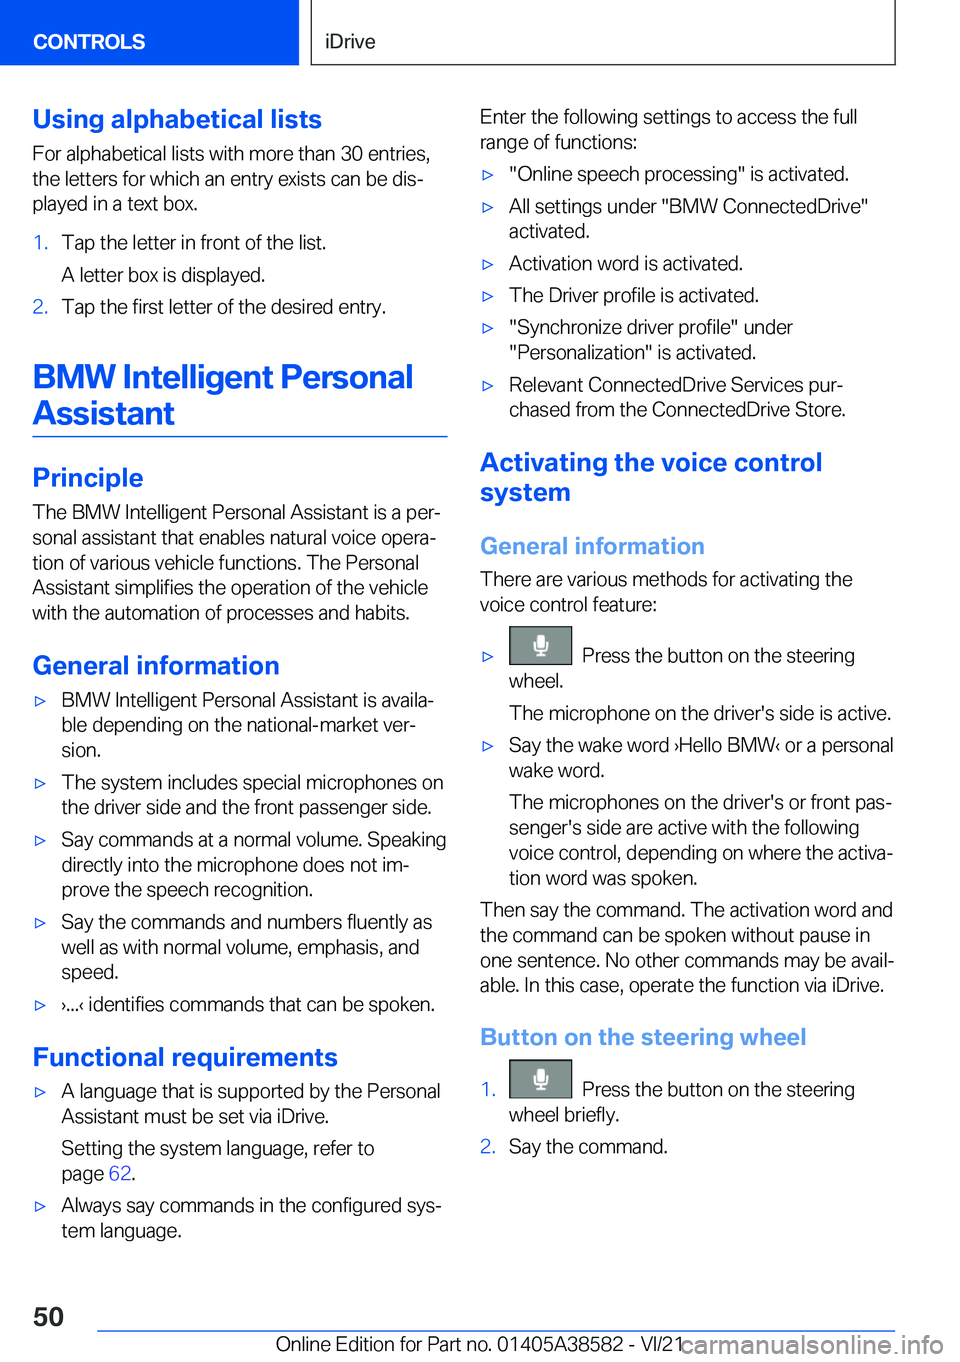 BMW X6 2022 Service Manual �U�s�i�n�g��a�l�p�h�a�b�e�t�i�c�a�l��l�i�s�t�s�F�o�r��a�l�p�h�a�b�e�t�i�c�a�l��l�i�s�t�s��w�i�t�h��m�o�r�e��t�h�a�n��3�0��e�n�t�r�i�e�s�,
�t�h�e��l�e�t�t�e�r�s��f�o�r��w�h�i�c�h��a�n��e�